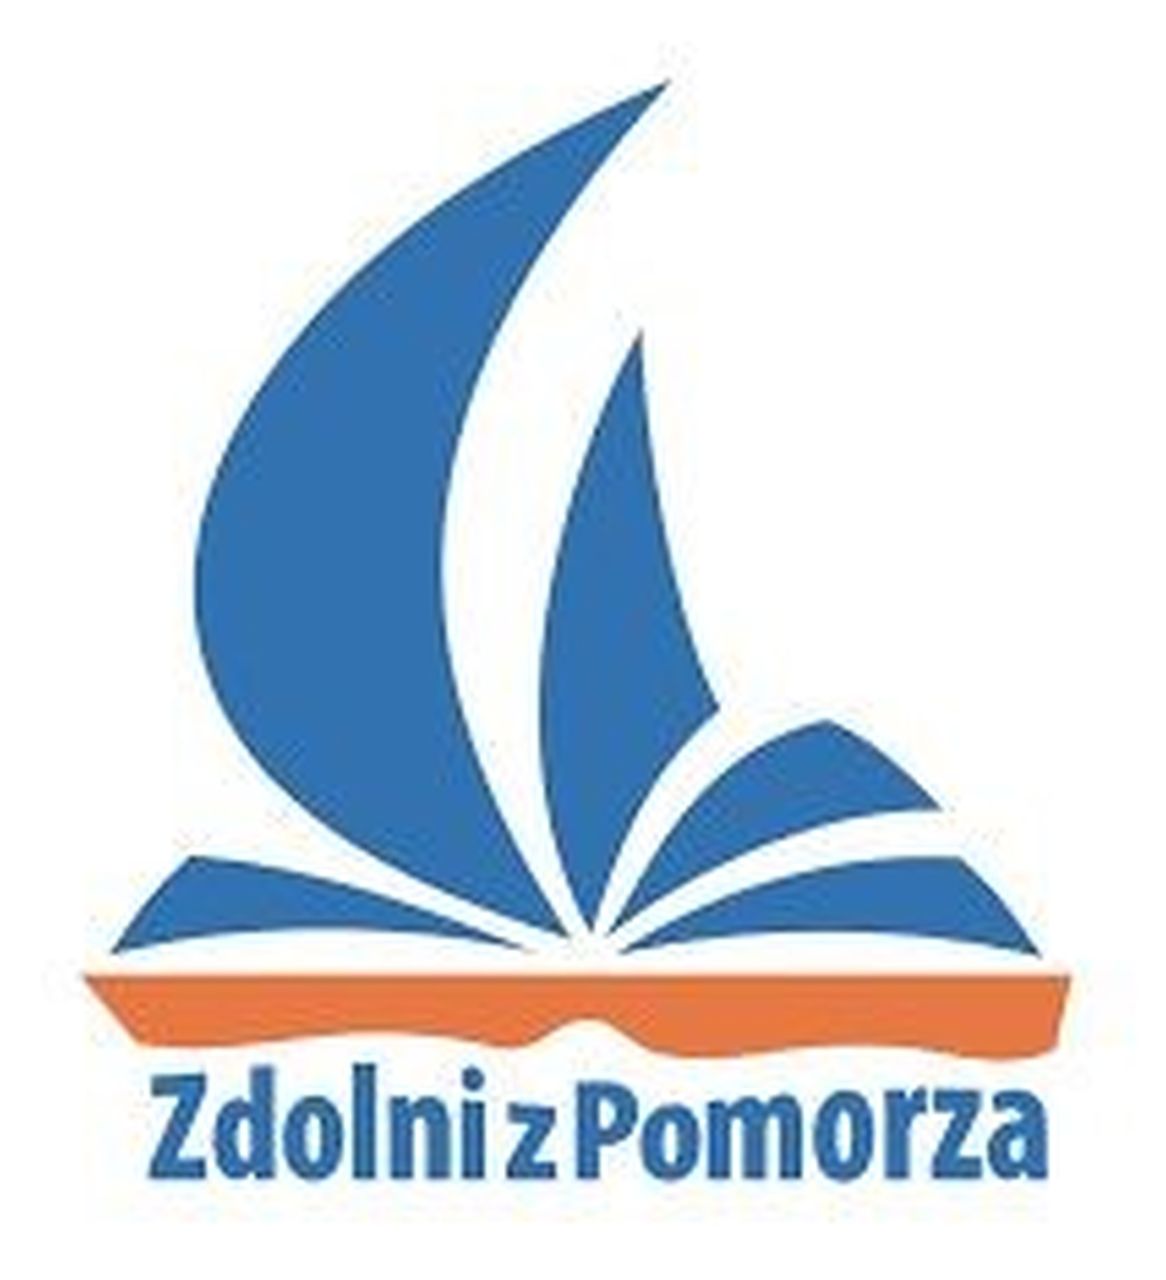 zdolni z pomorza logo